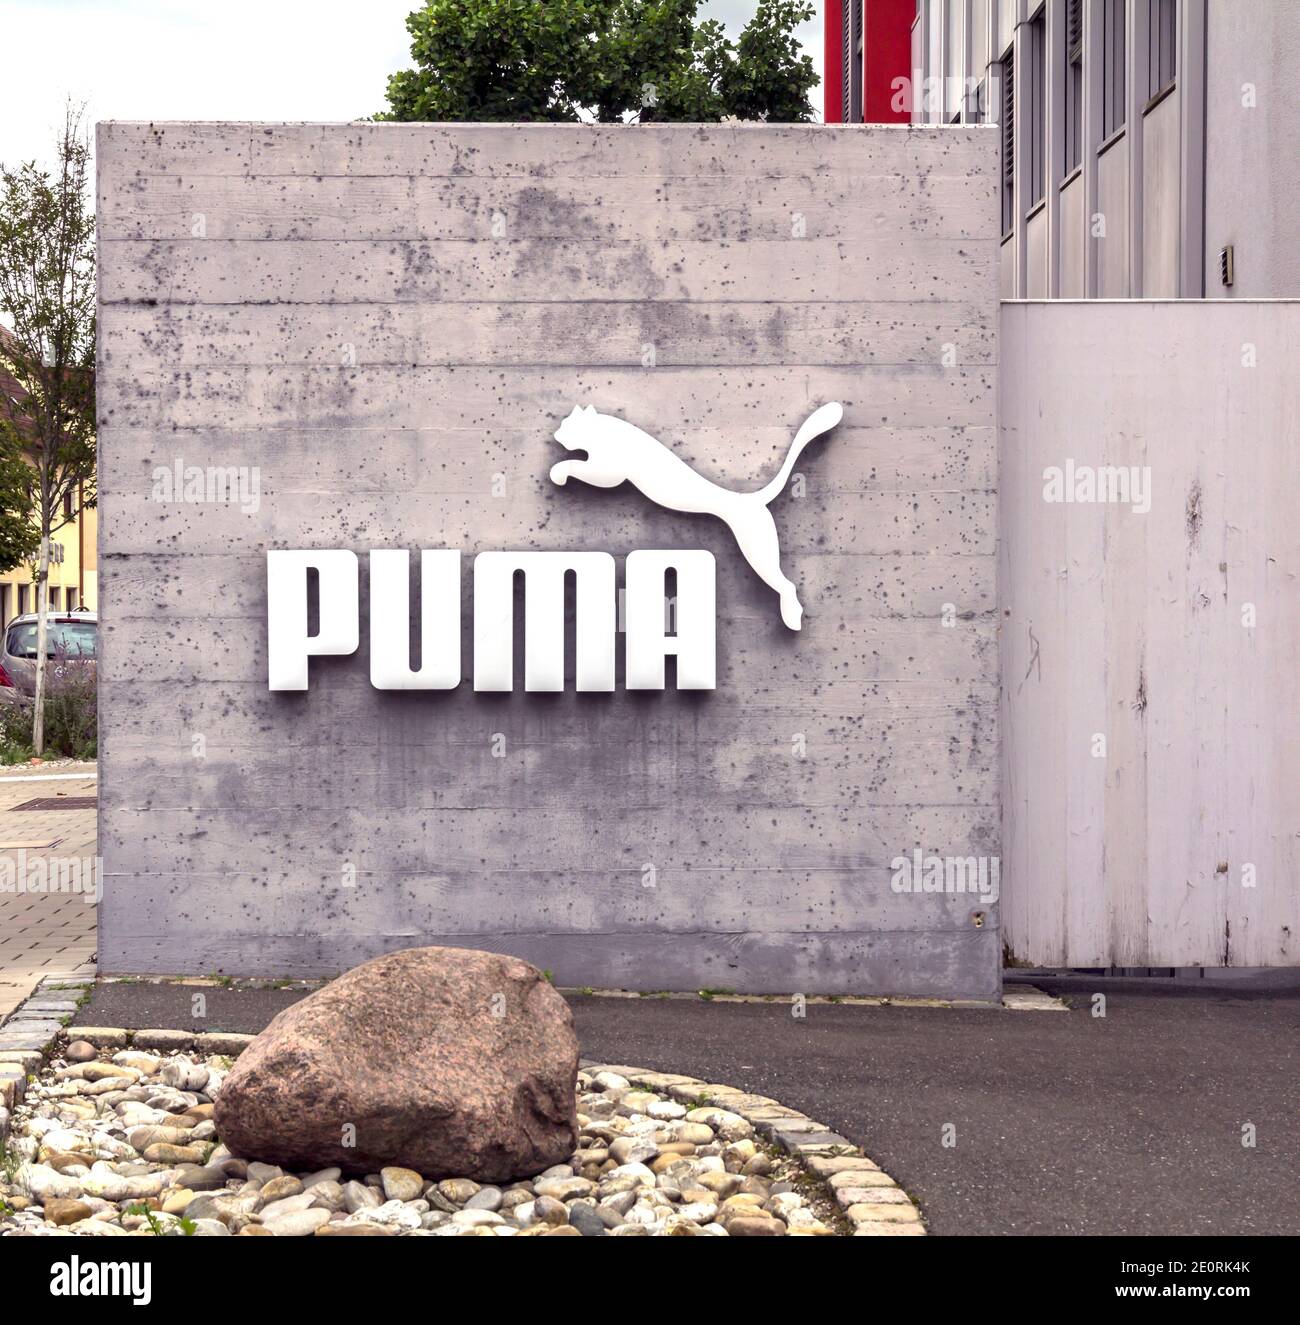 Puma logo on a facade. Puma is a major german multinational company that produces athletic, casual footwear, sportswear, headquartered in Bavaria Stock Photo